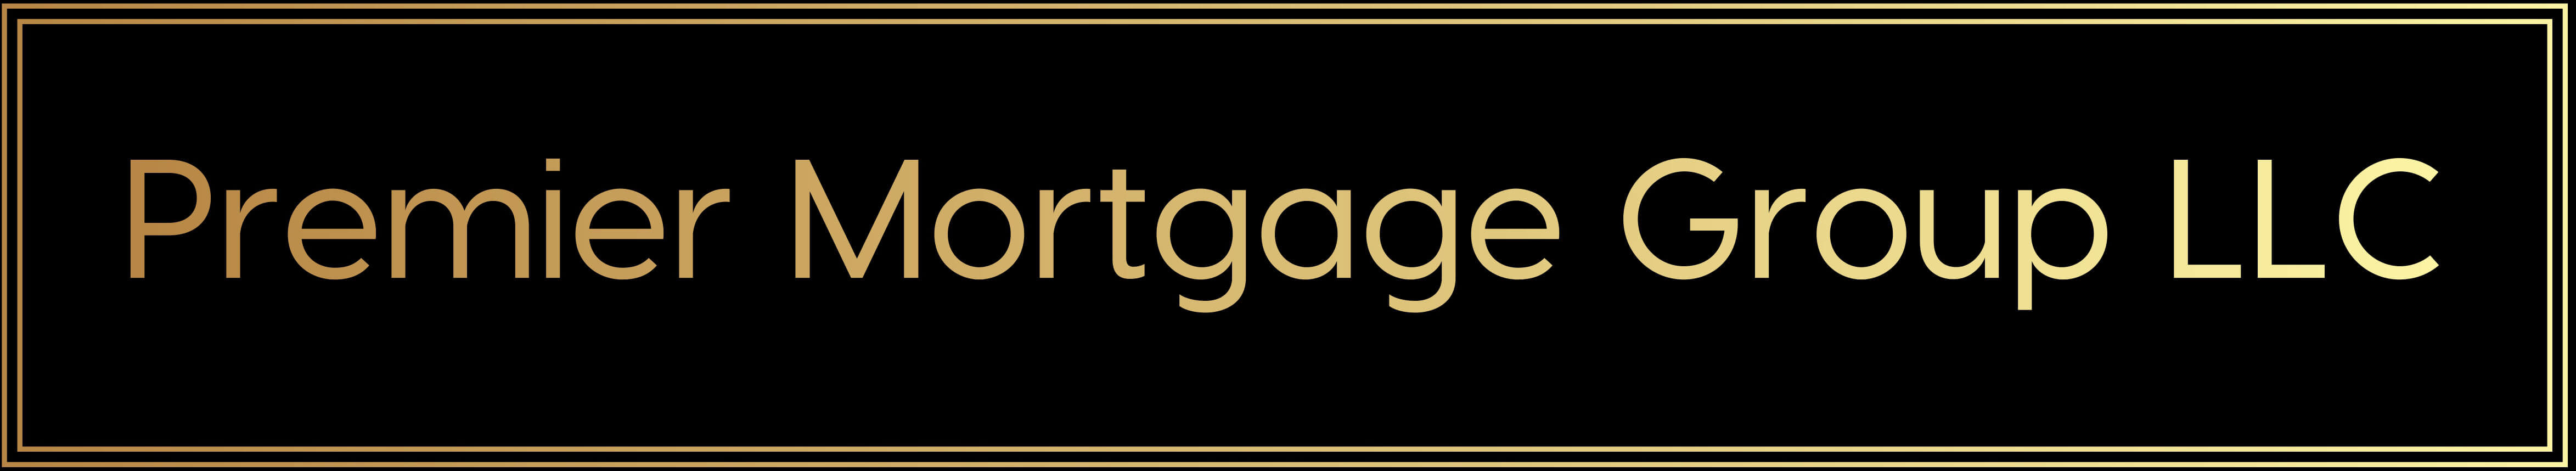 Premier Mortgage Group LLC